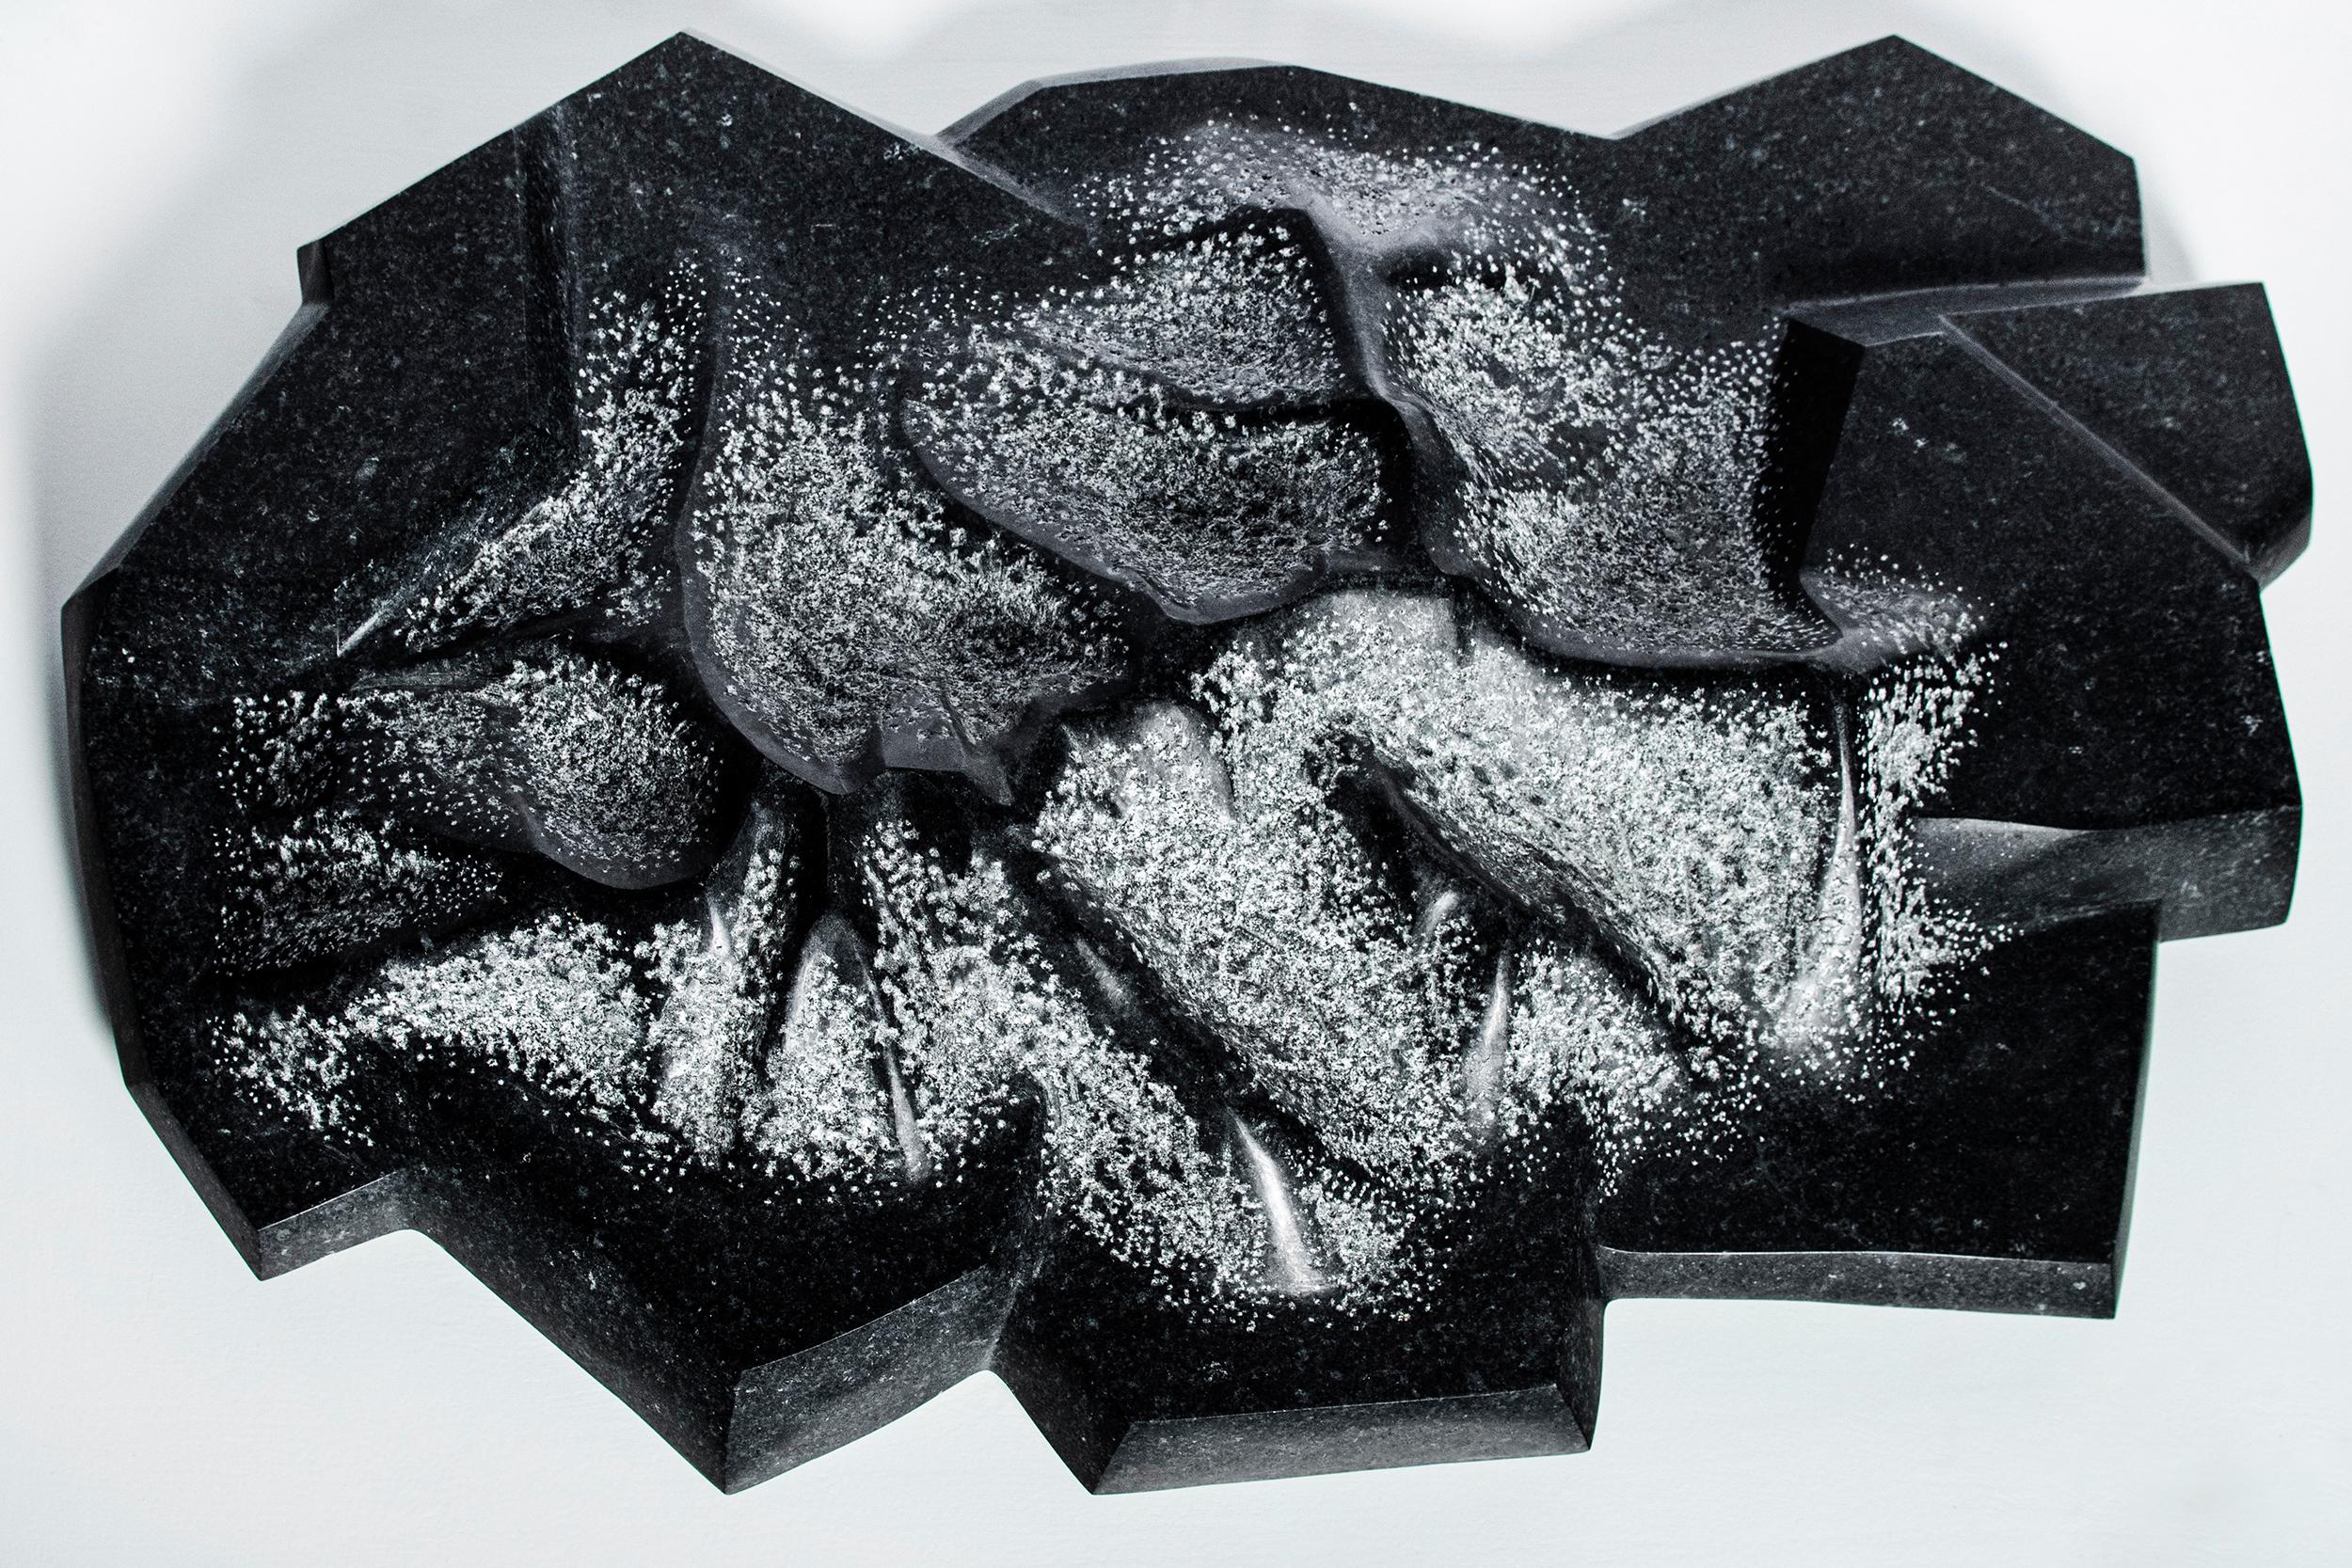 Granite sculpture by Juan Pablo Marturano, Argentina, 2019.
Titled: 